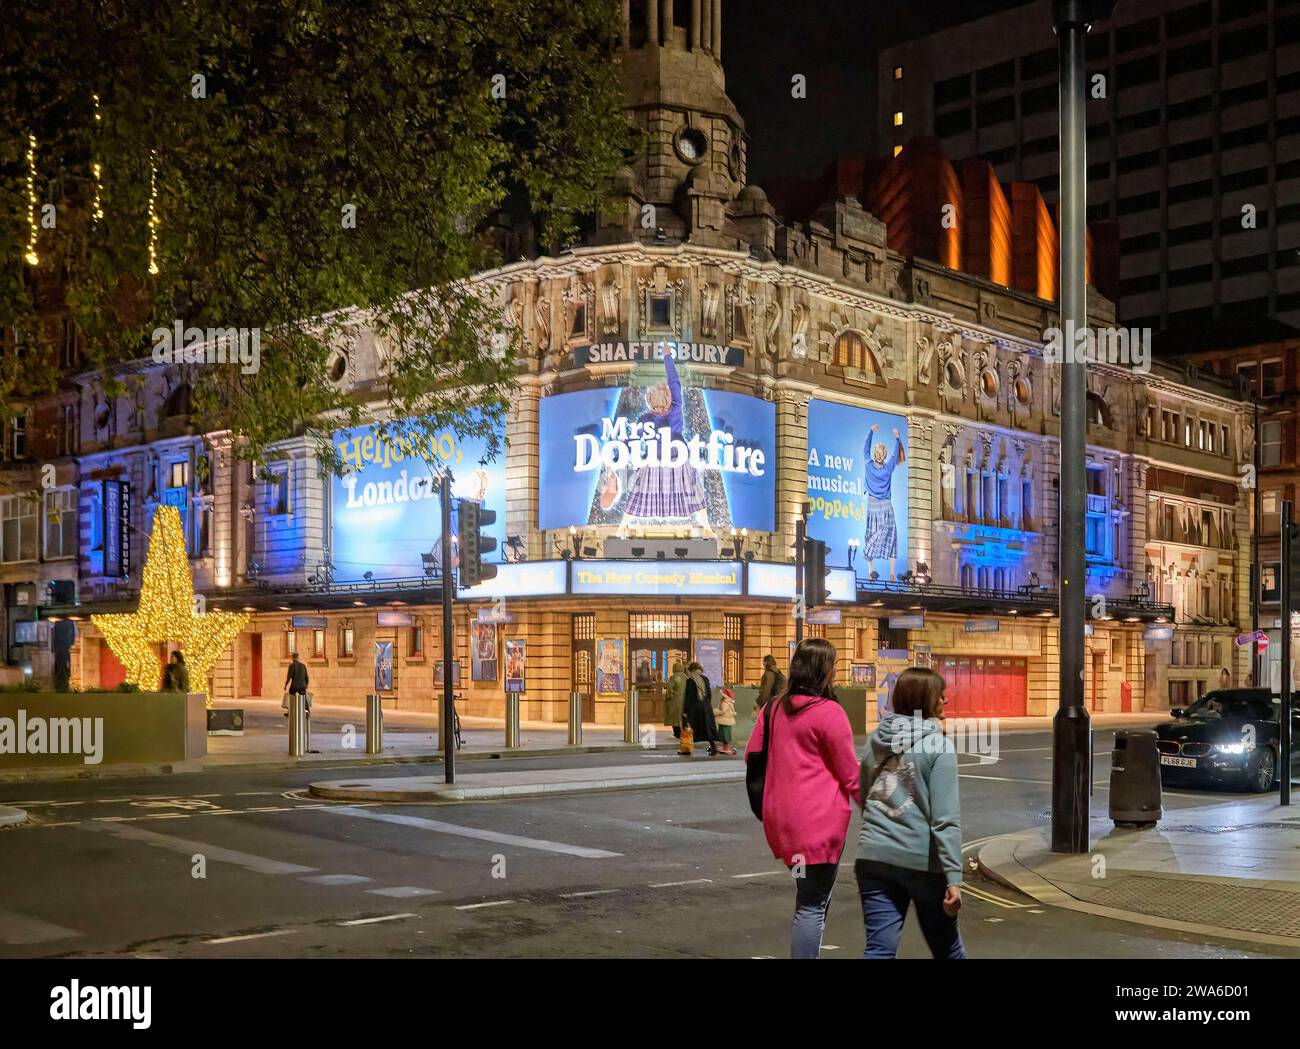 Shaftsbury Theatre, Shaftsbury Avenue, Mrs Doubtfire production,  Soho, Night scene, Central London UK Stock Photo